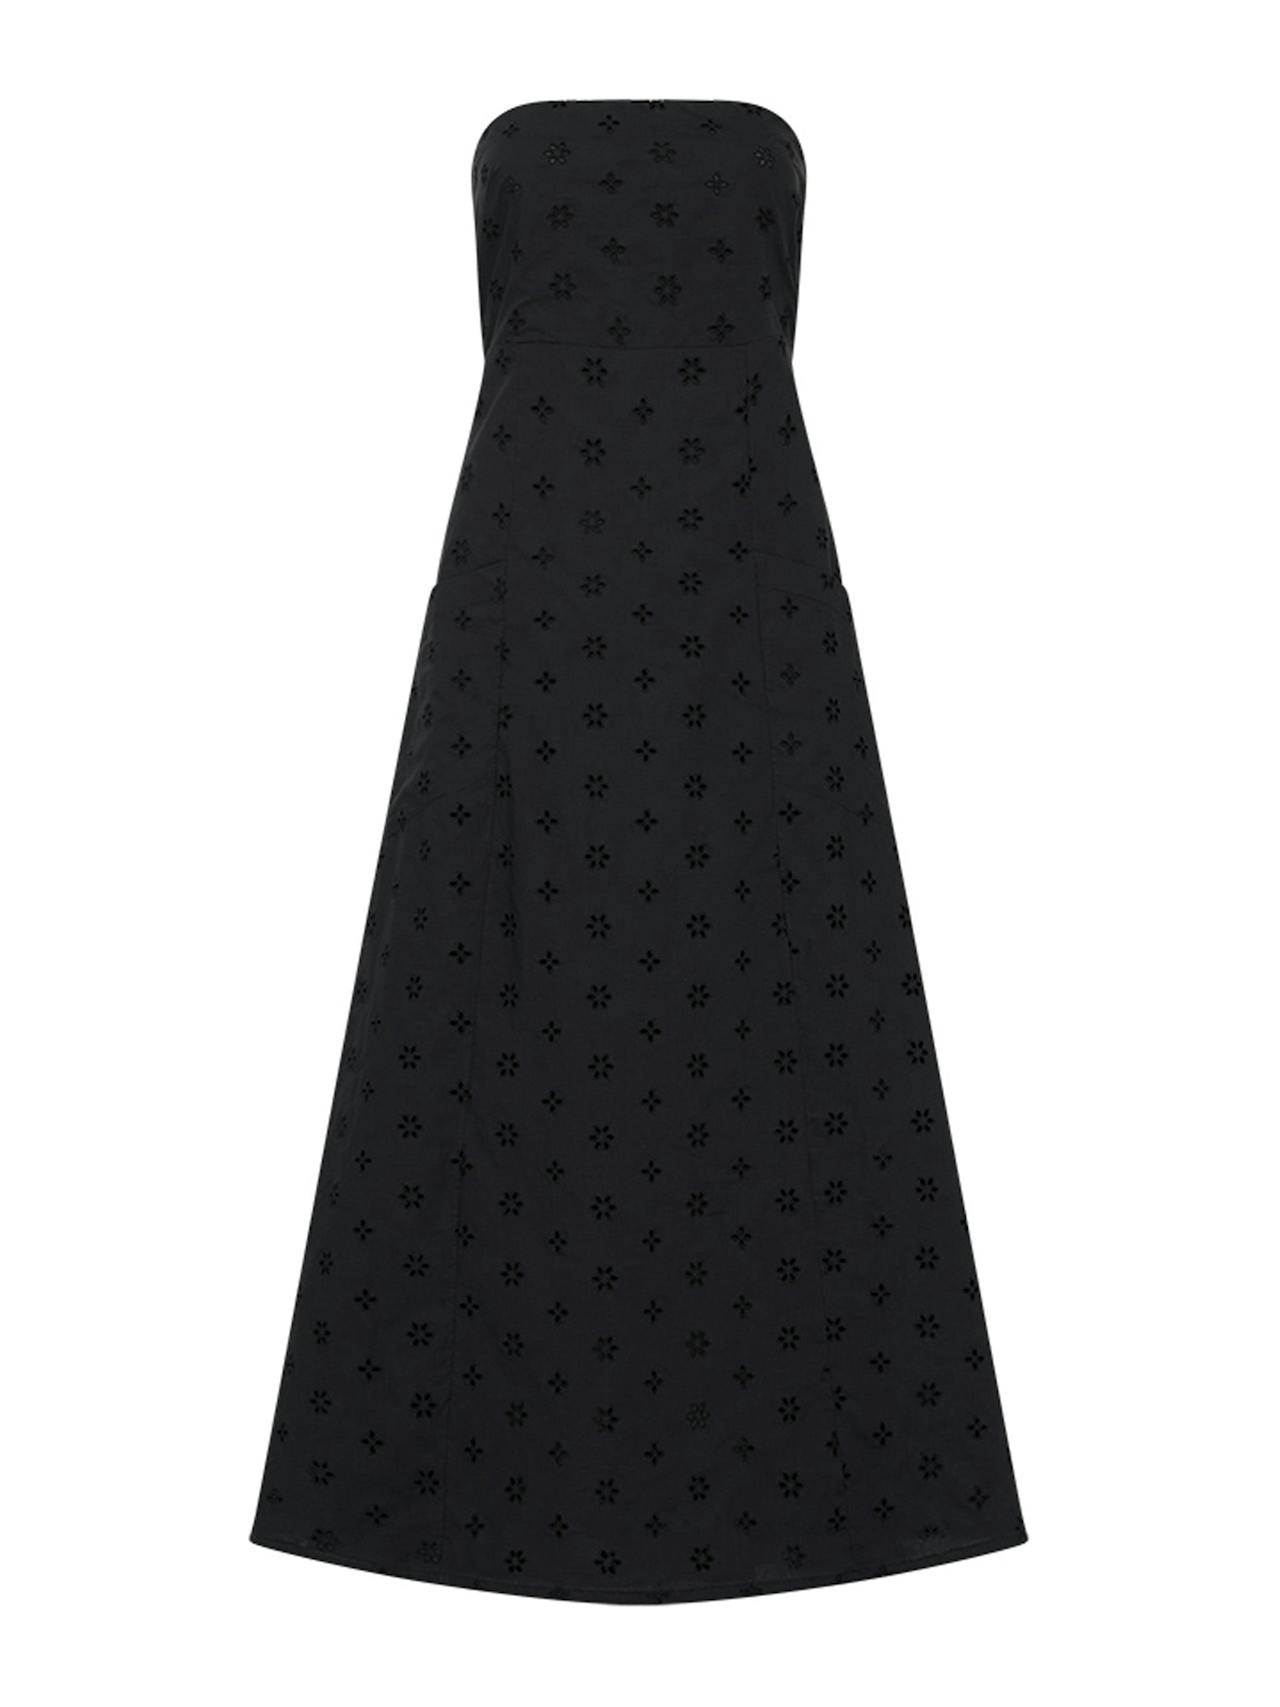 Black floral broderie strapless dress